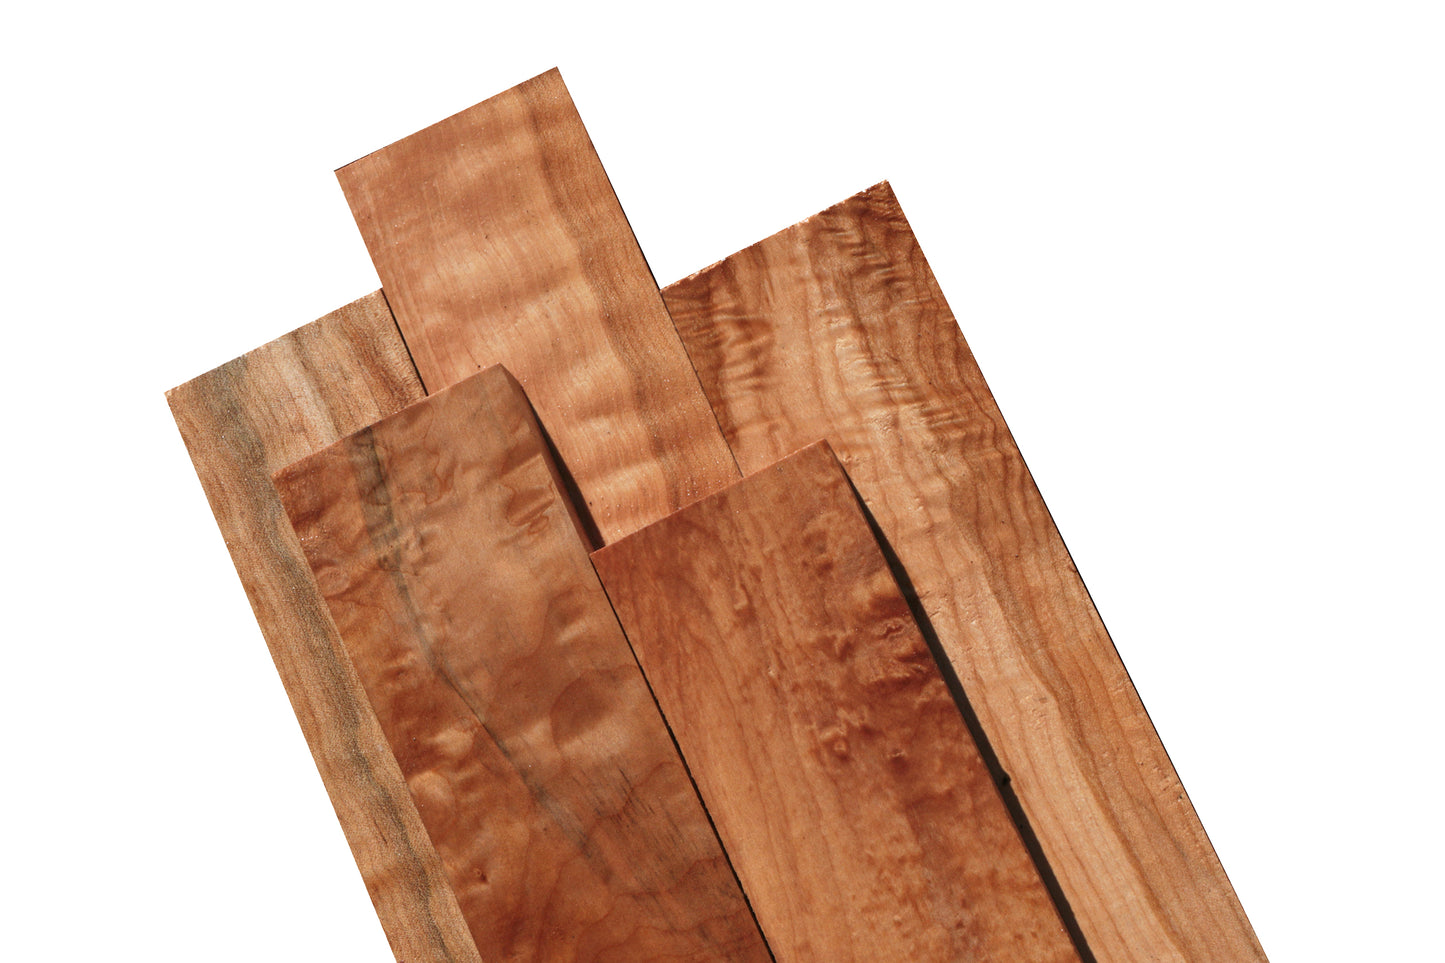 Figured Maple Lumber (11-1/4" x 3-1/4" x 7/8")